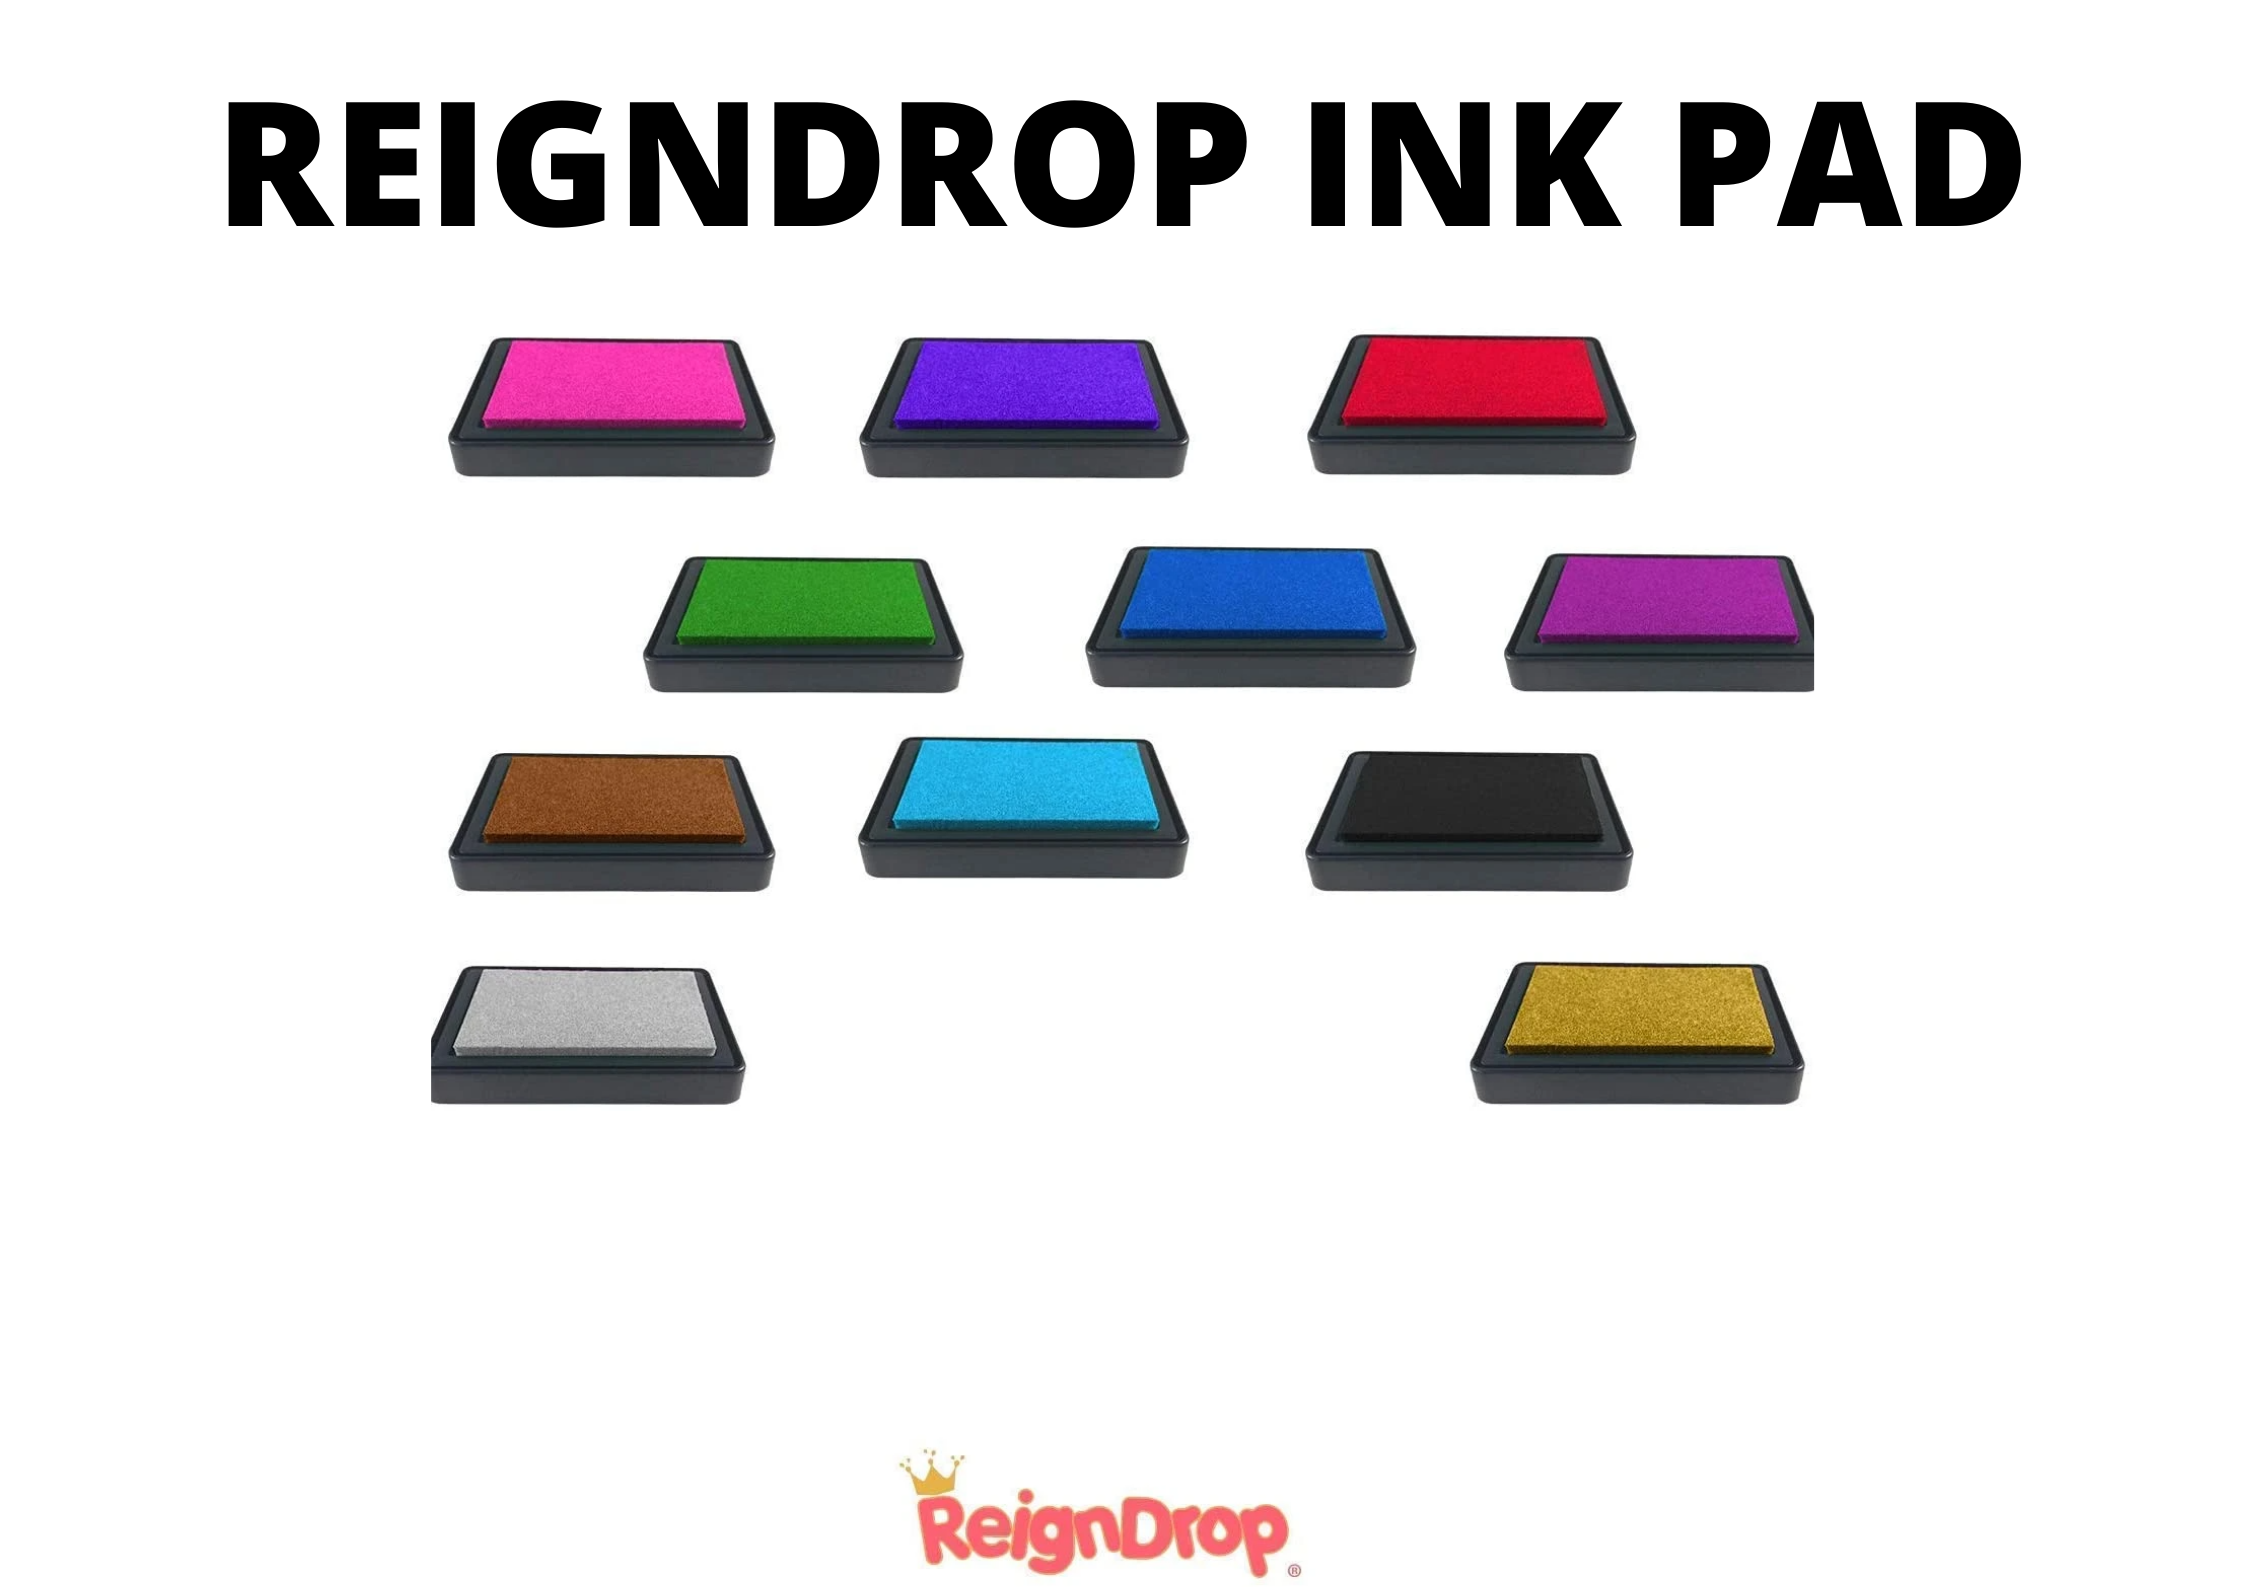 Baby Pink Ink Pad